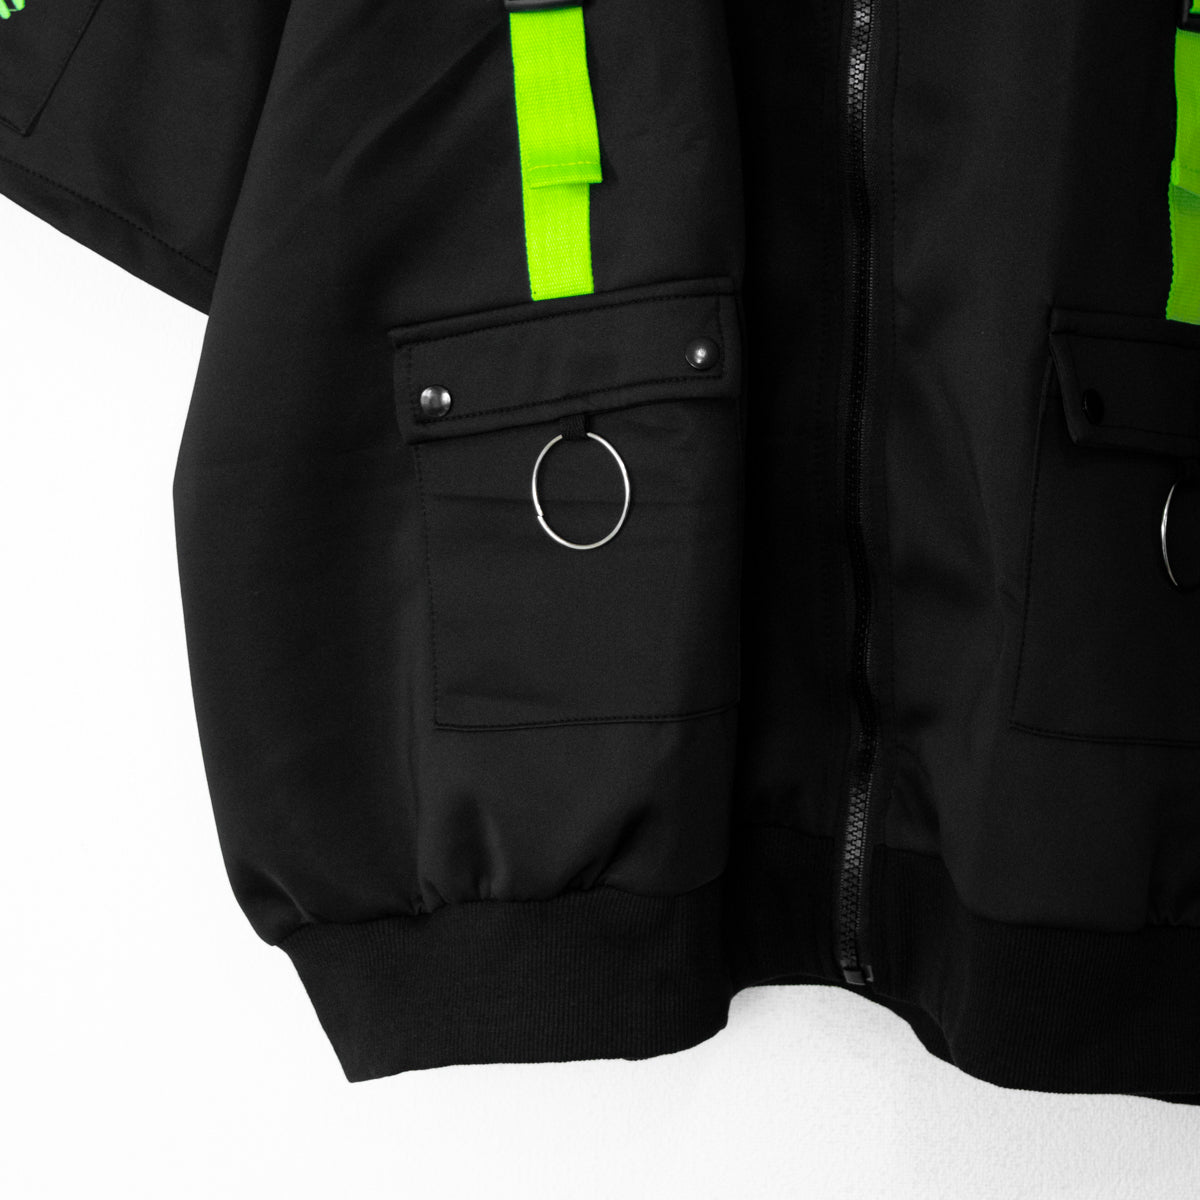 ACDC RAG CYBER PUNK Uzurai Jacket S/S Black NEon Green